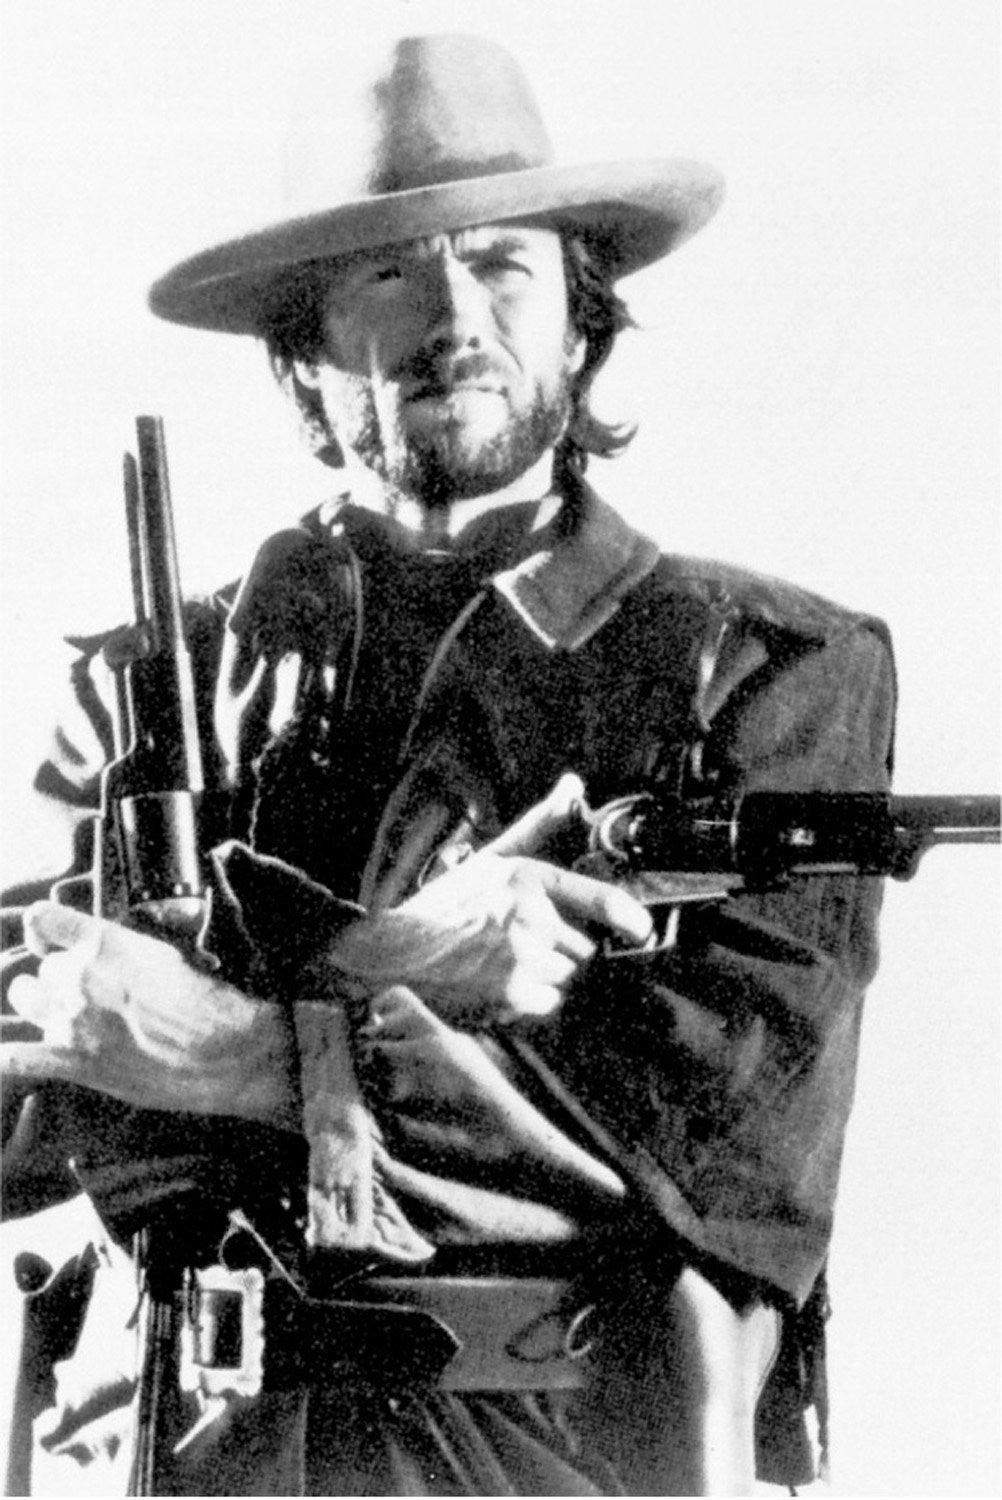 Clint Eastwood Poster - HalfMoonMusic